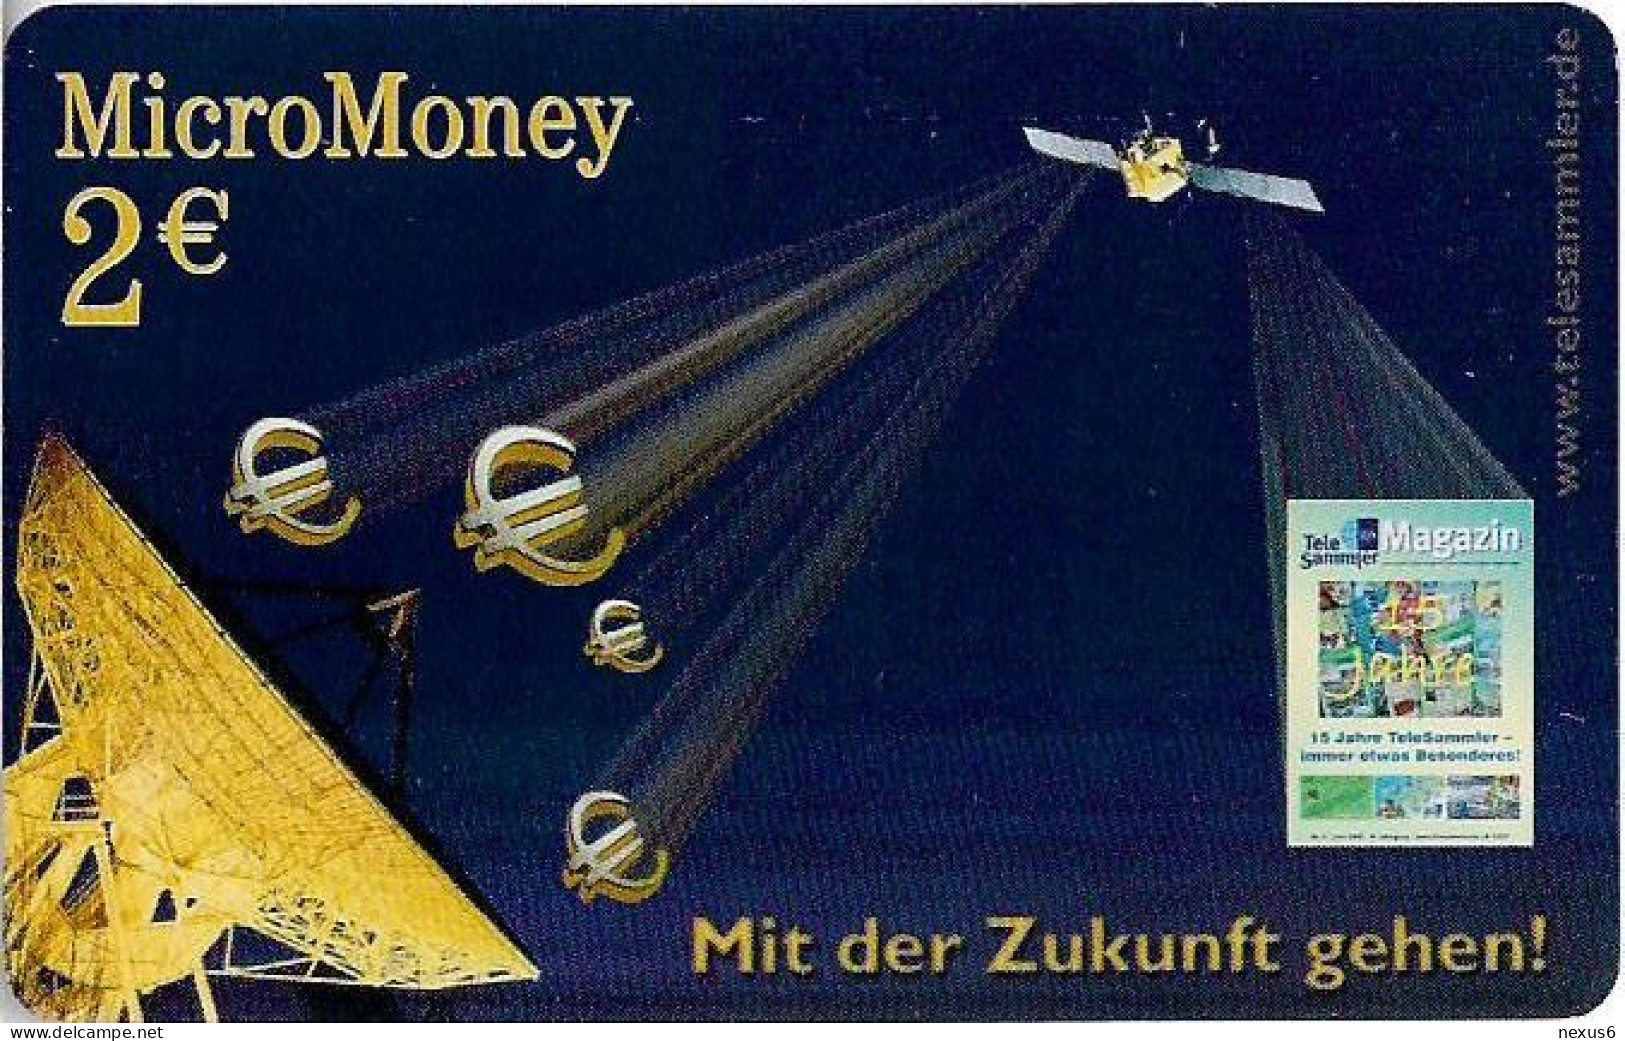 Germany - Micromoney - GHP MM O 006-07.04 - TeleSammler E.V Magazine (Satellite), Exp.02.2006, Rem. Mem. 2€, 500ex, Mint - [3] T-Pay Micro-Money